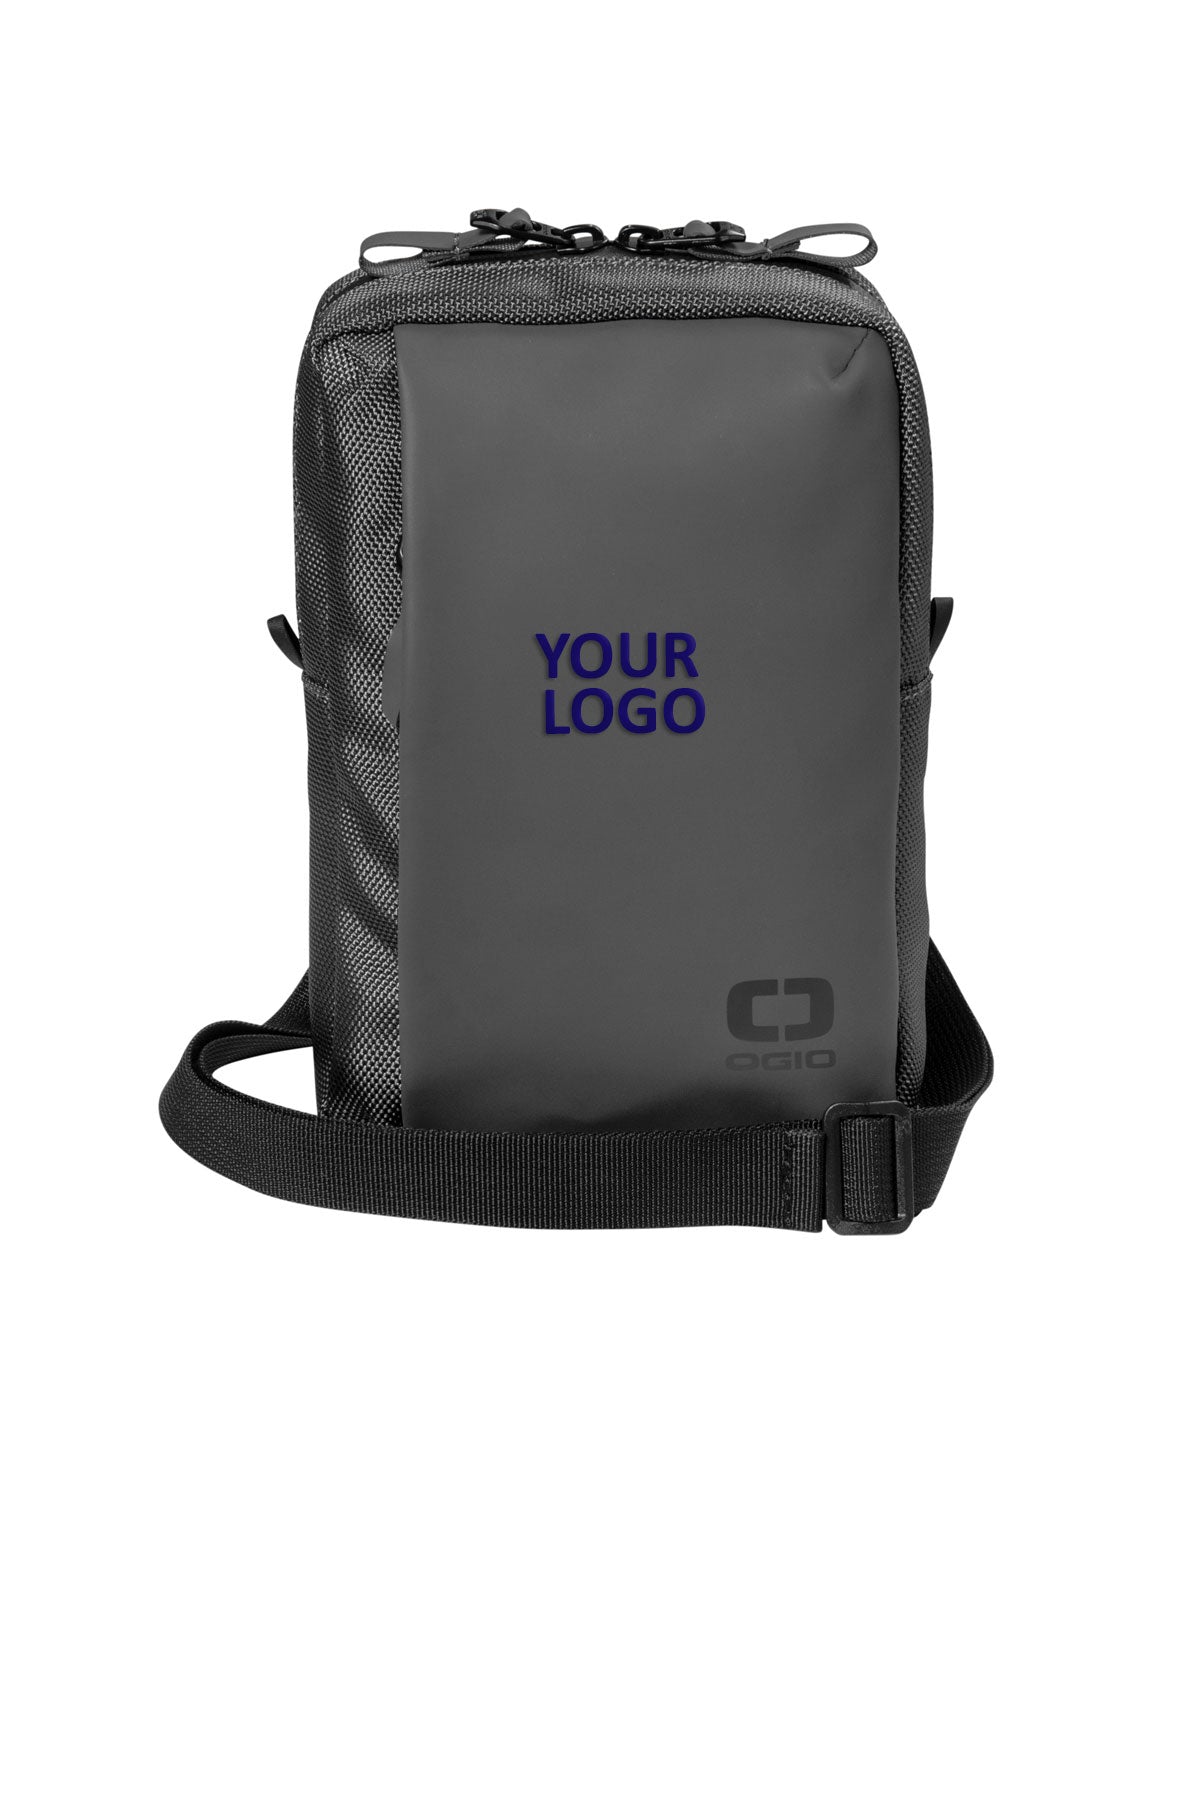 OGIO Resistant Branded Crossbody Bags, Tarmac Grey